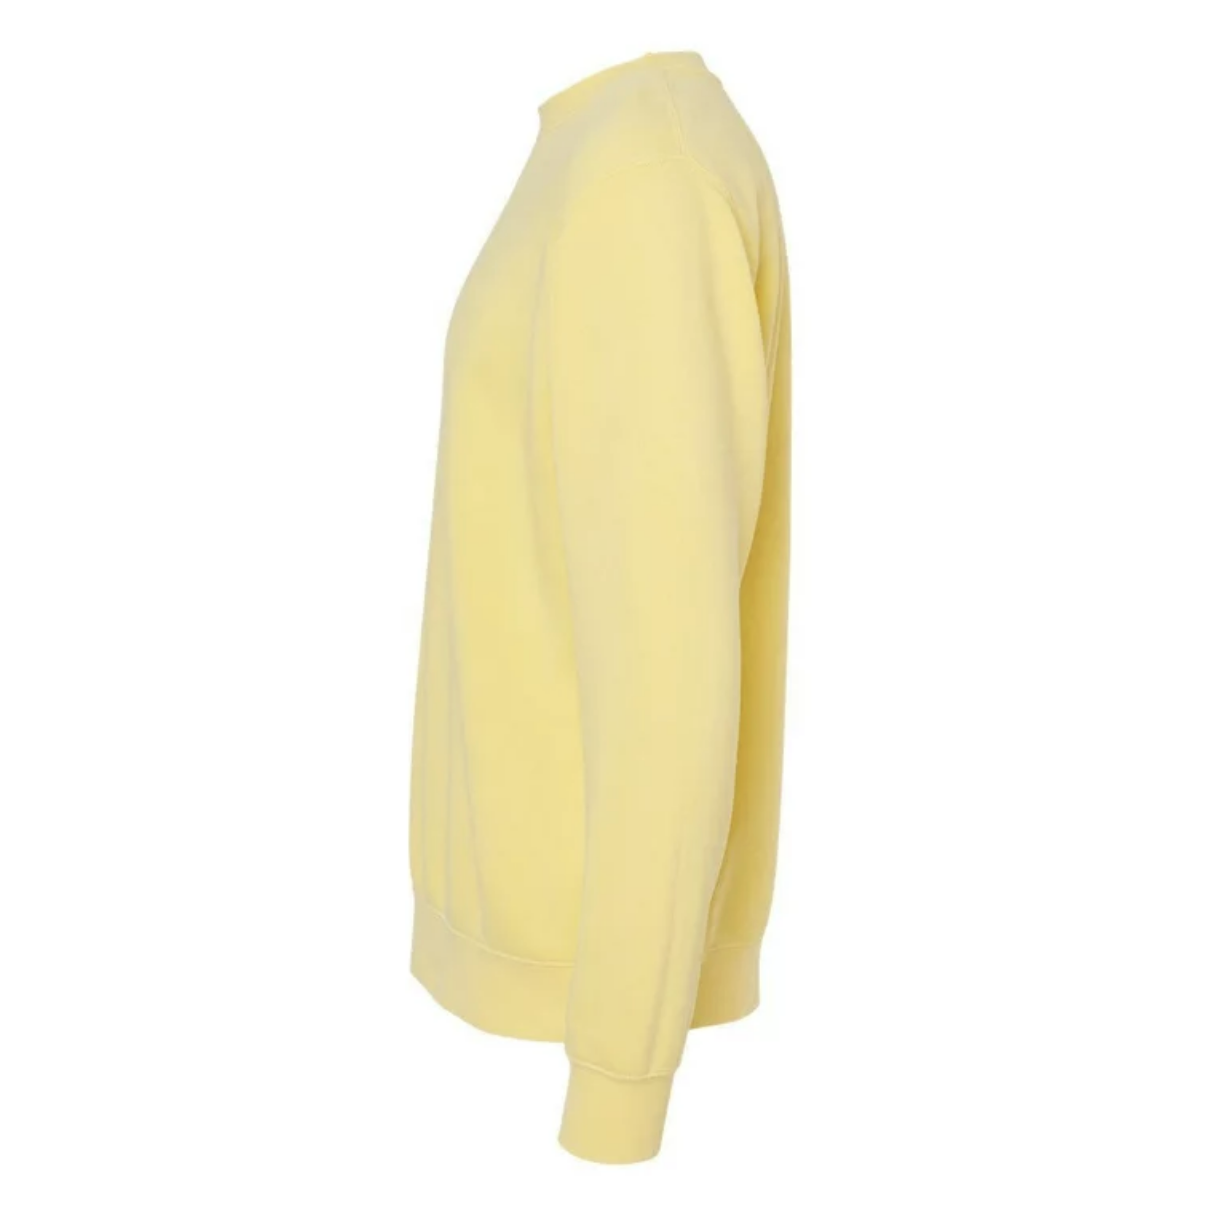 The Boyfriend Sweatshirt (Light Yellow)